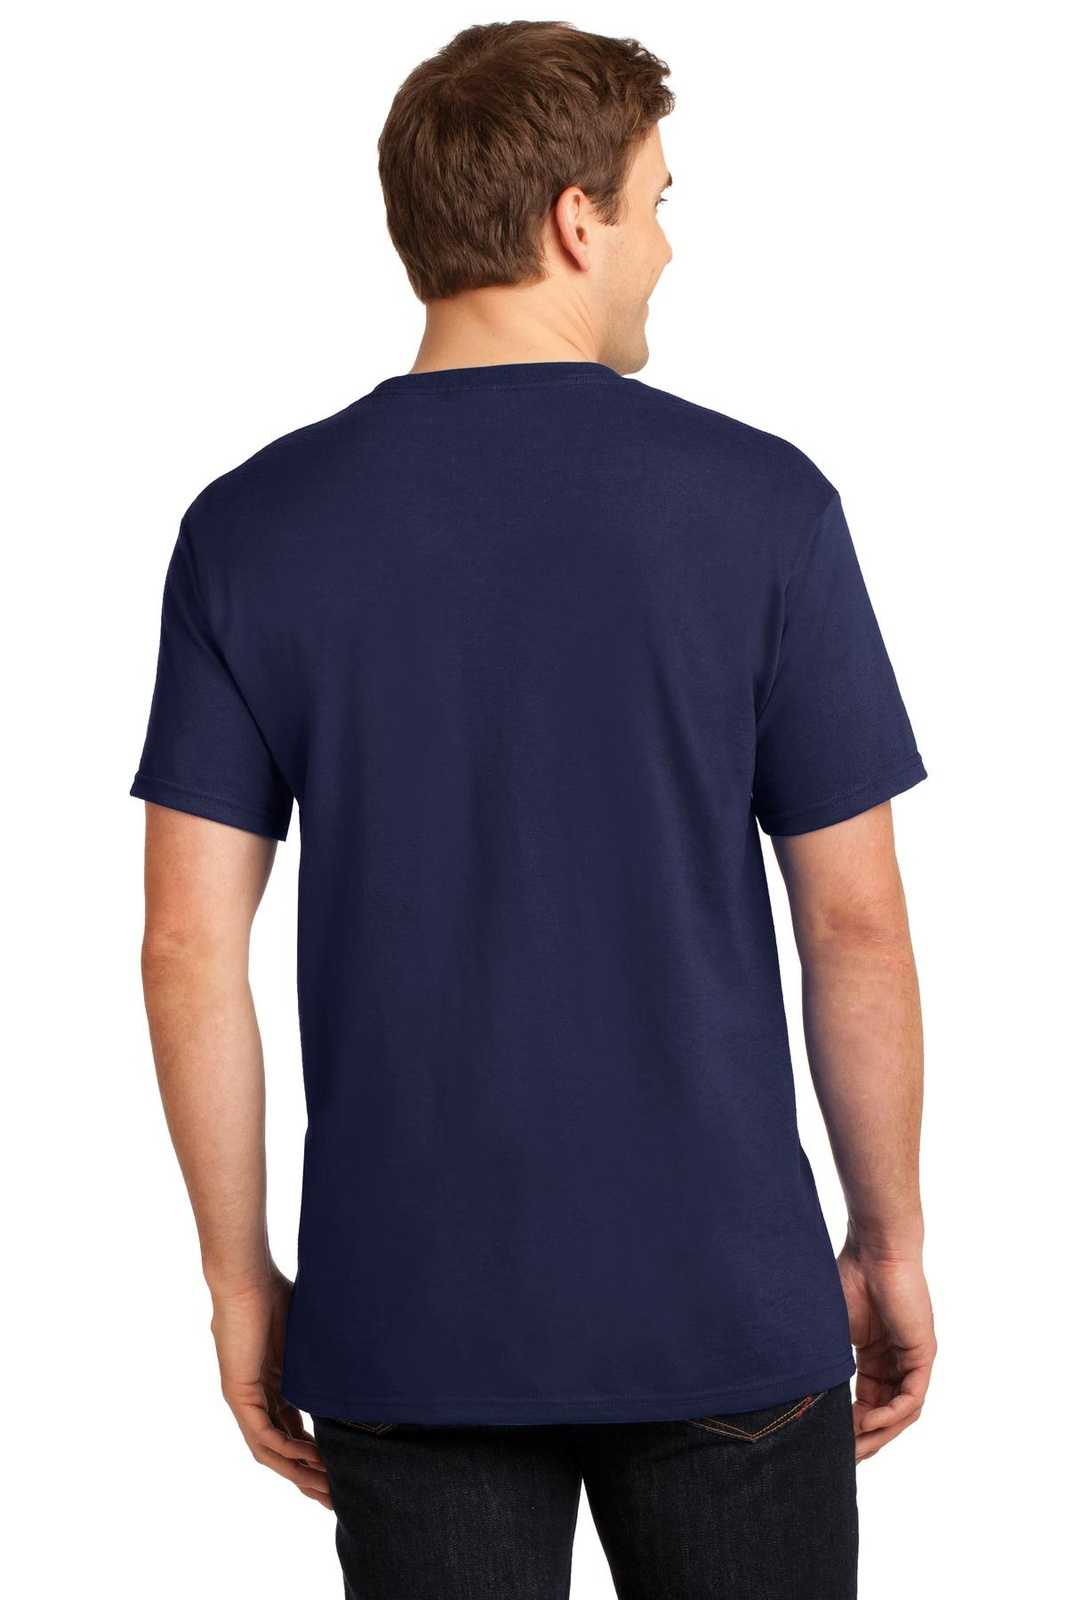 Jerzees 29MP Dri-Power 50/50 Cotton/Poly Pocket T-Shirt - Navy - HIT a Double